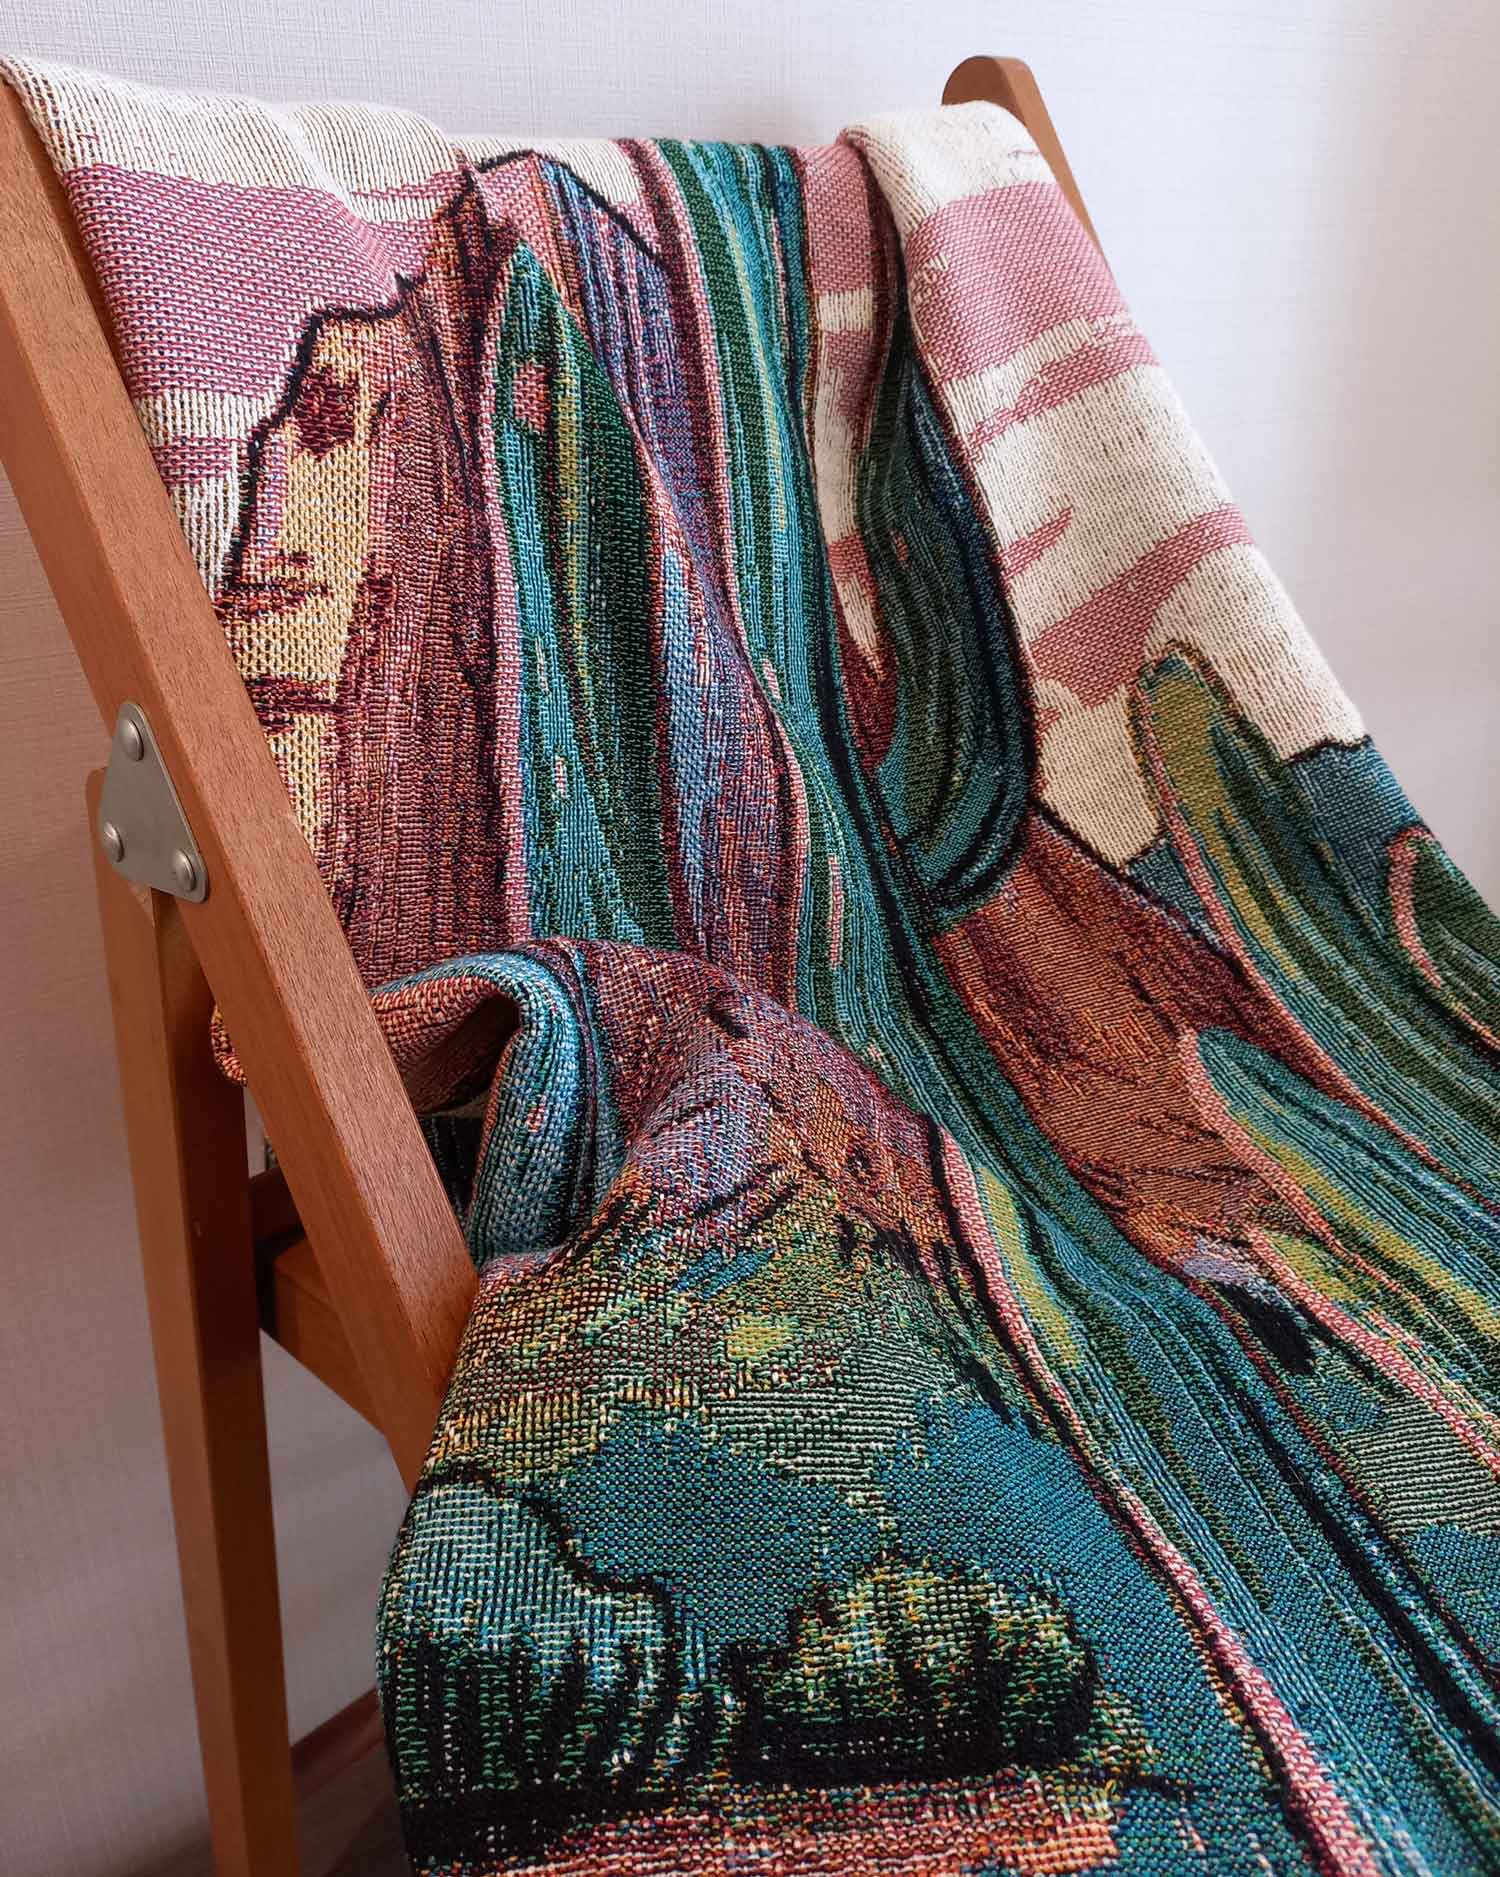 Desert Cactus Throw Blanket on a chair